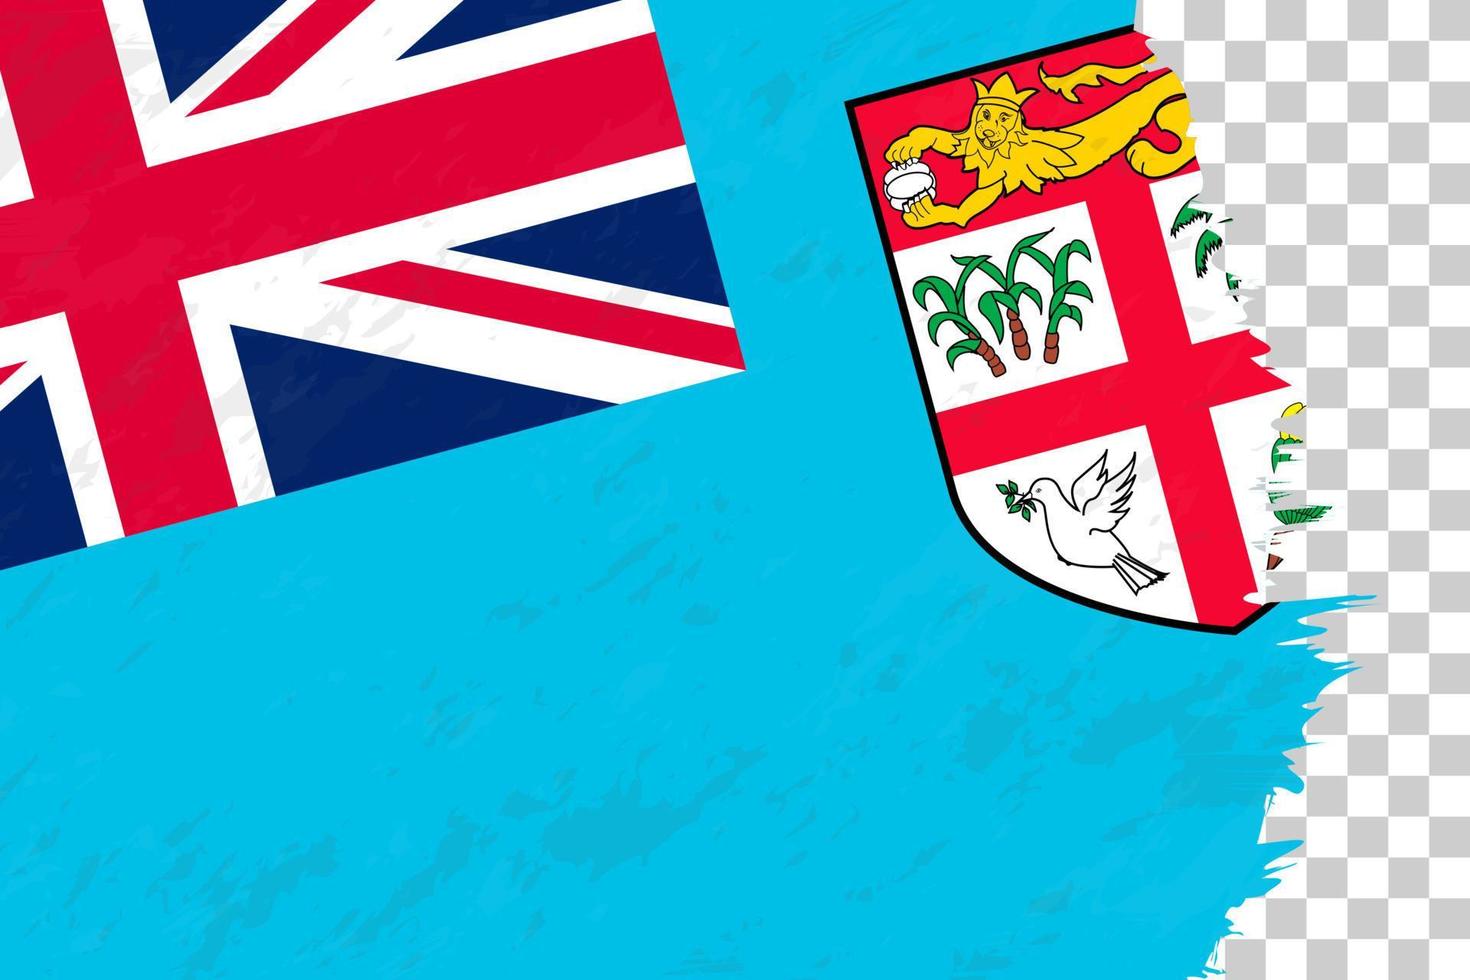 grunge abstracto horizontal cepillado bandera de fiyi en rejilla transparente. vector